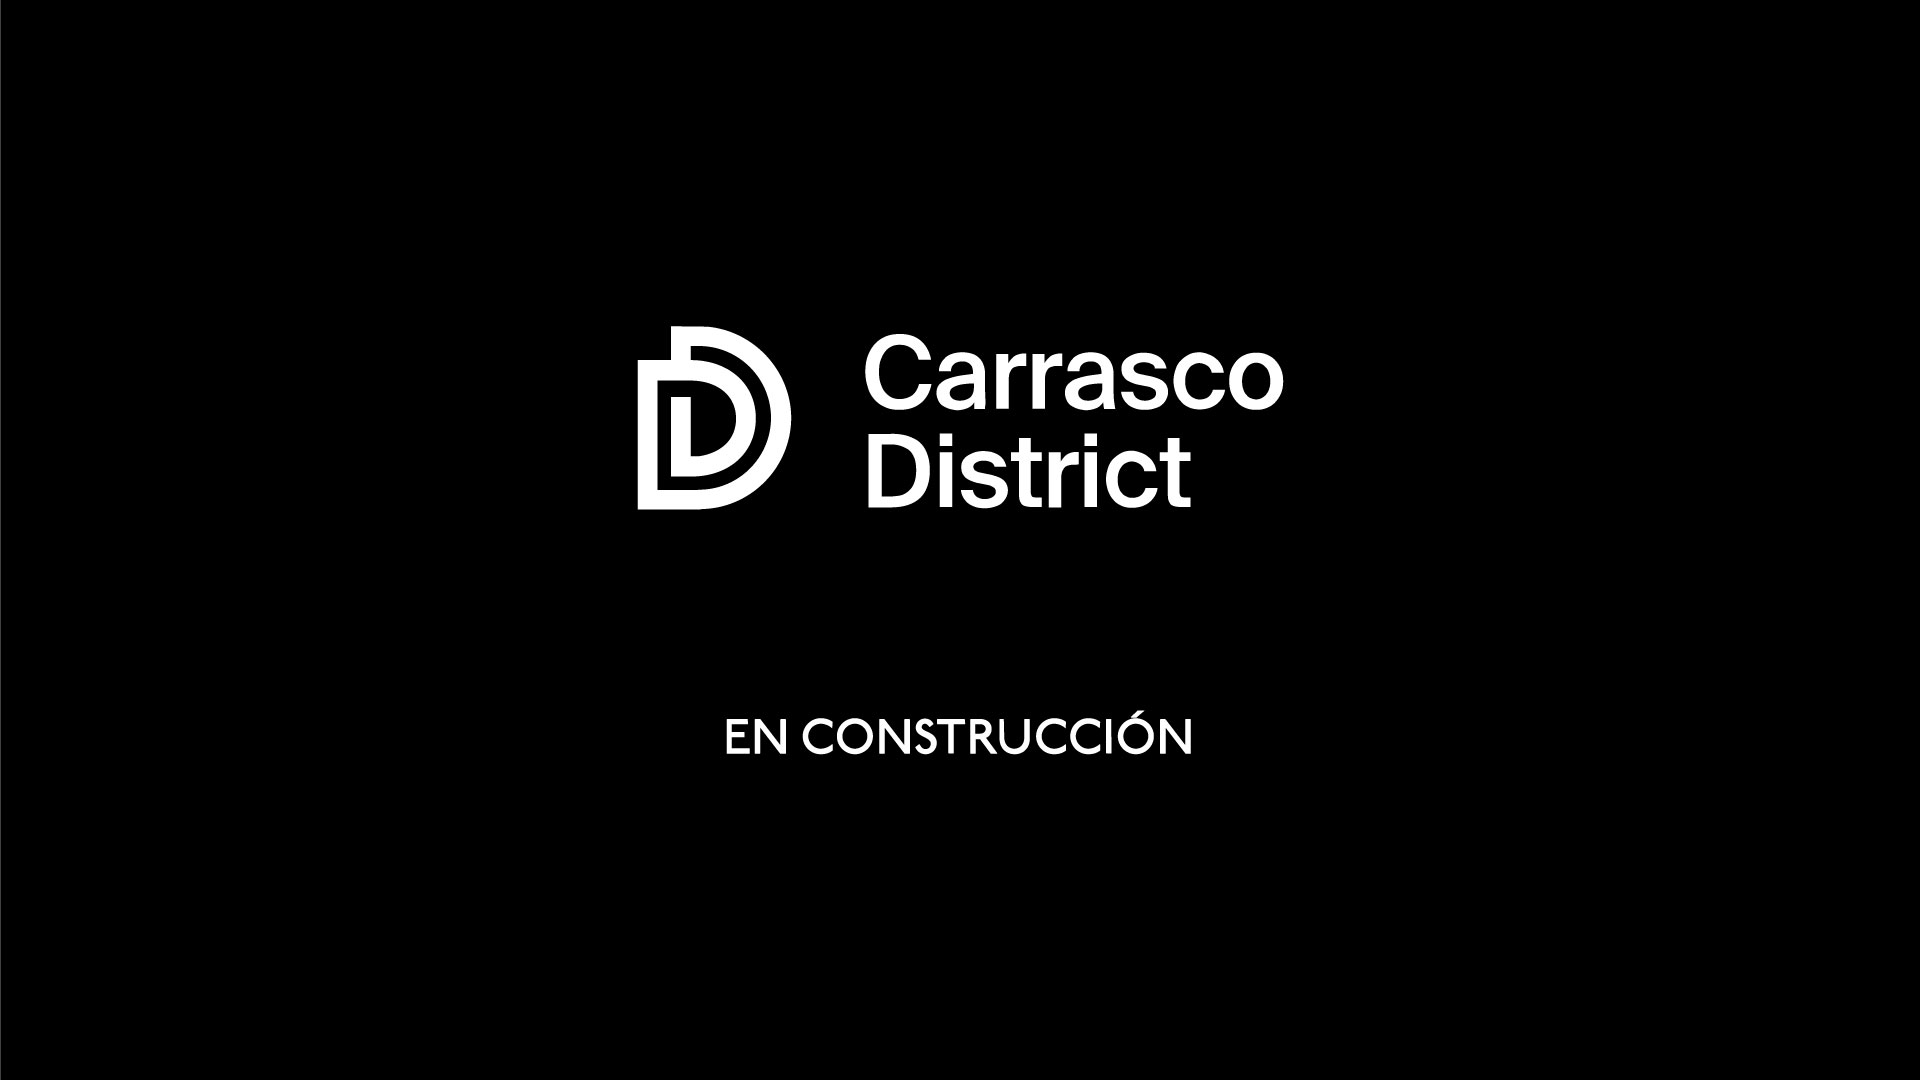 Carrasco District